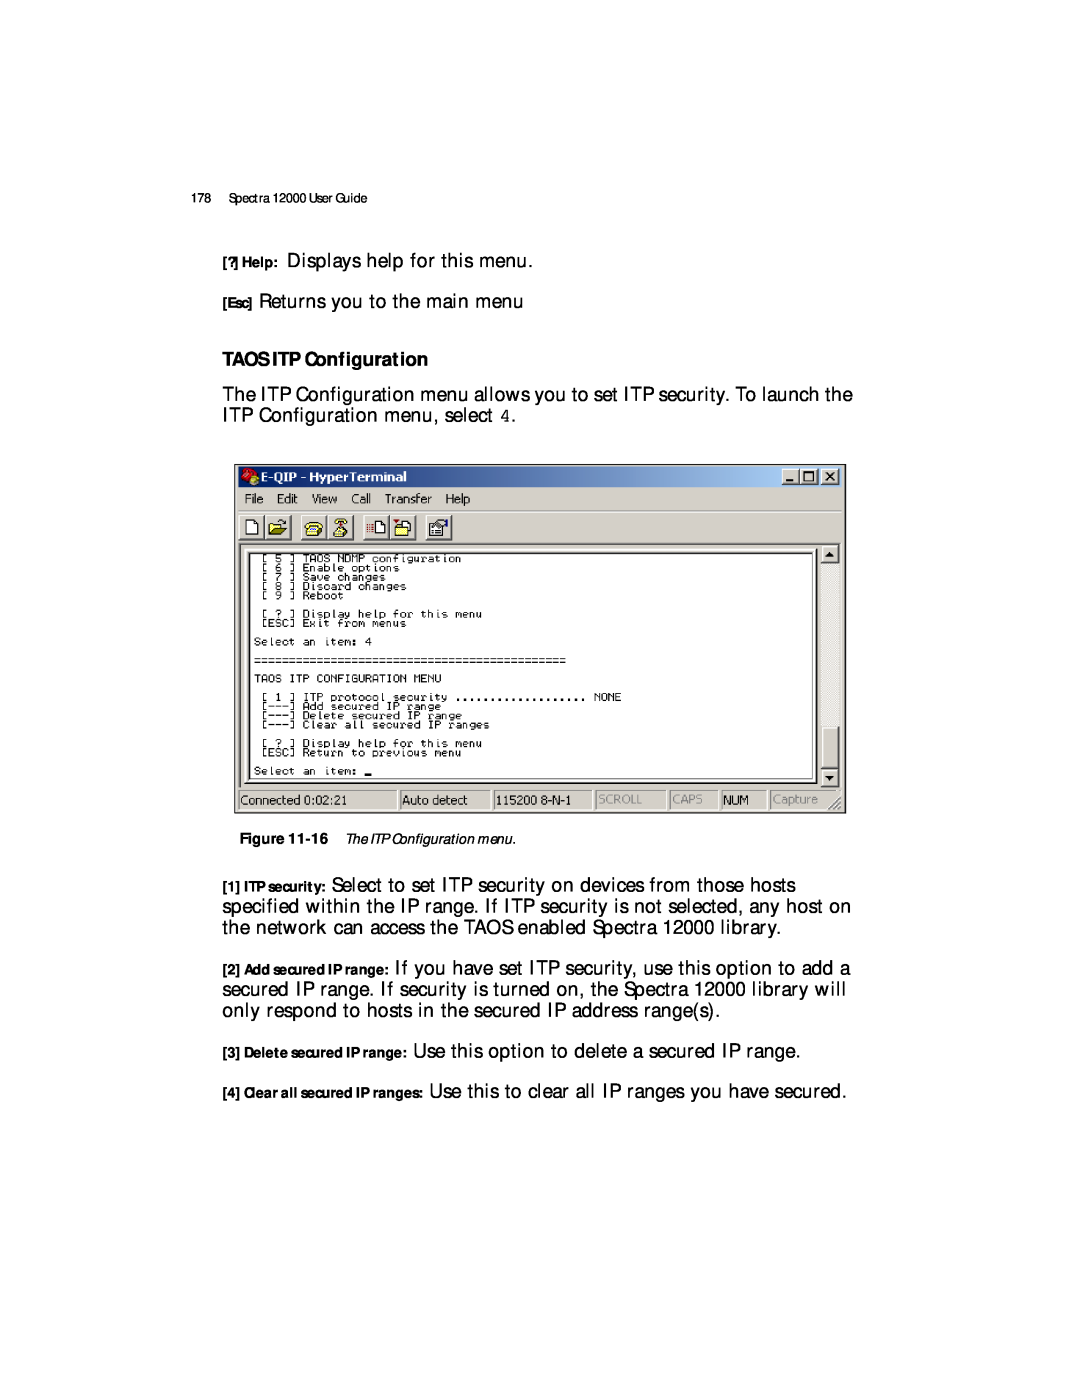 Spectra Logic manual 16 The ITP Configuration menu, TAOS ITP Configuration, Spectra 12000 User Guide 